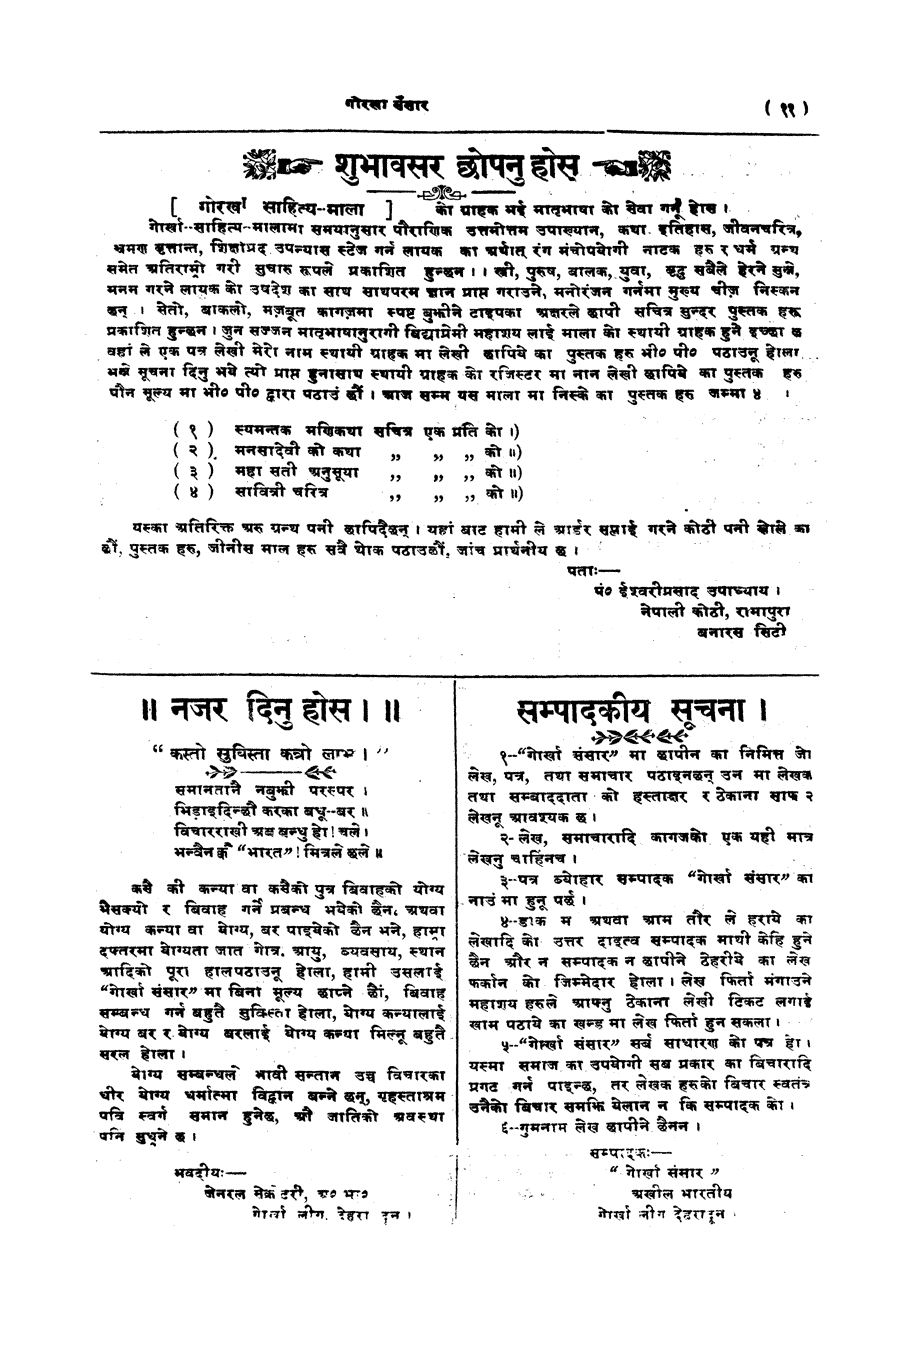 Gorkha Sansar, 15 June 1928, page 11